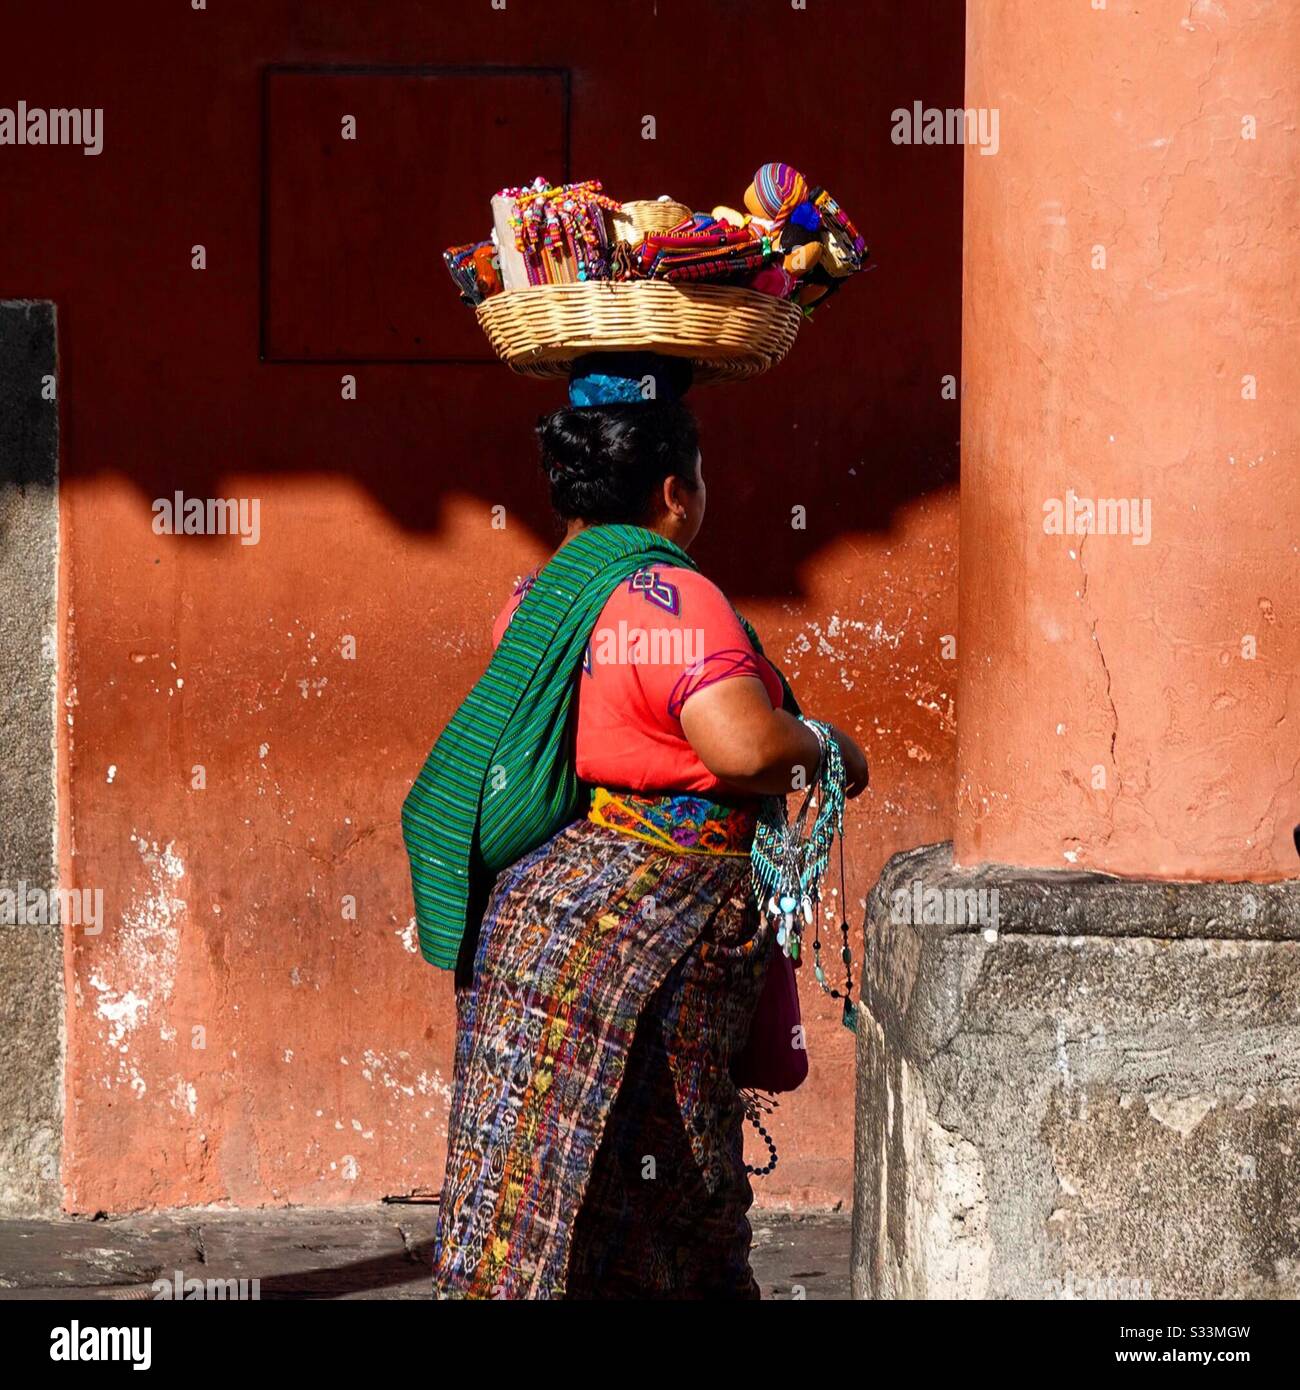 Folk art street vendor in Antigua, Guatemala Stock Photo